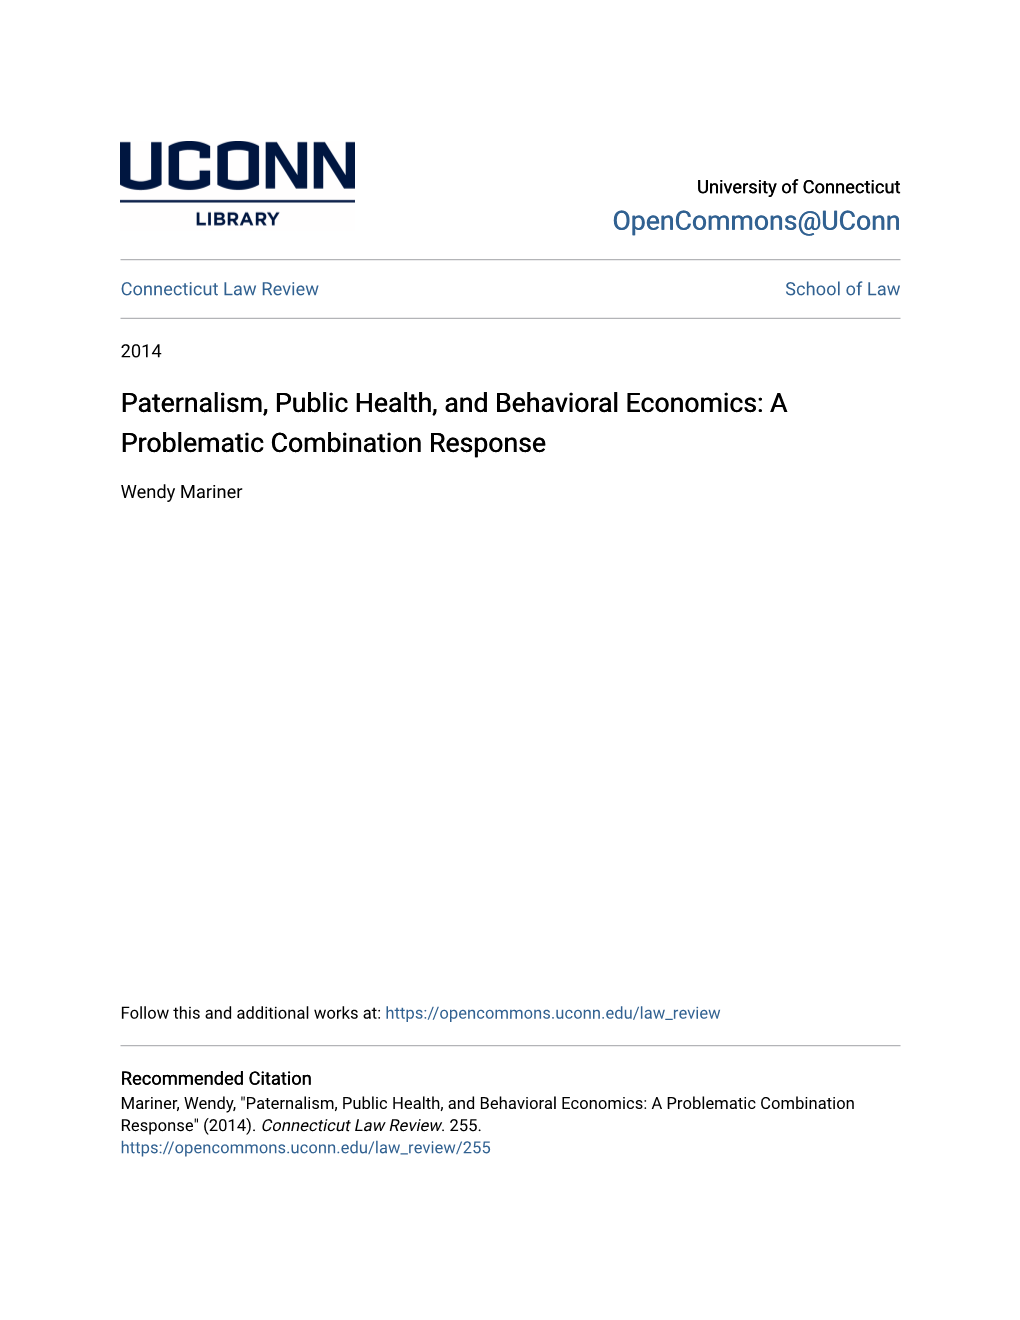 Paternalism, Public Health, and Behavioral Economics: a Problematic Combination Response